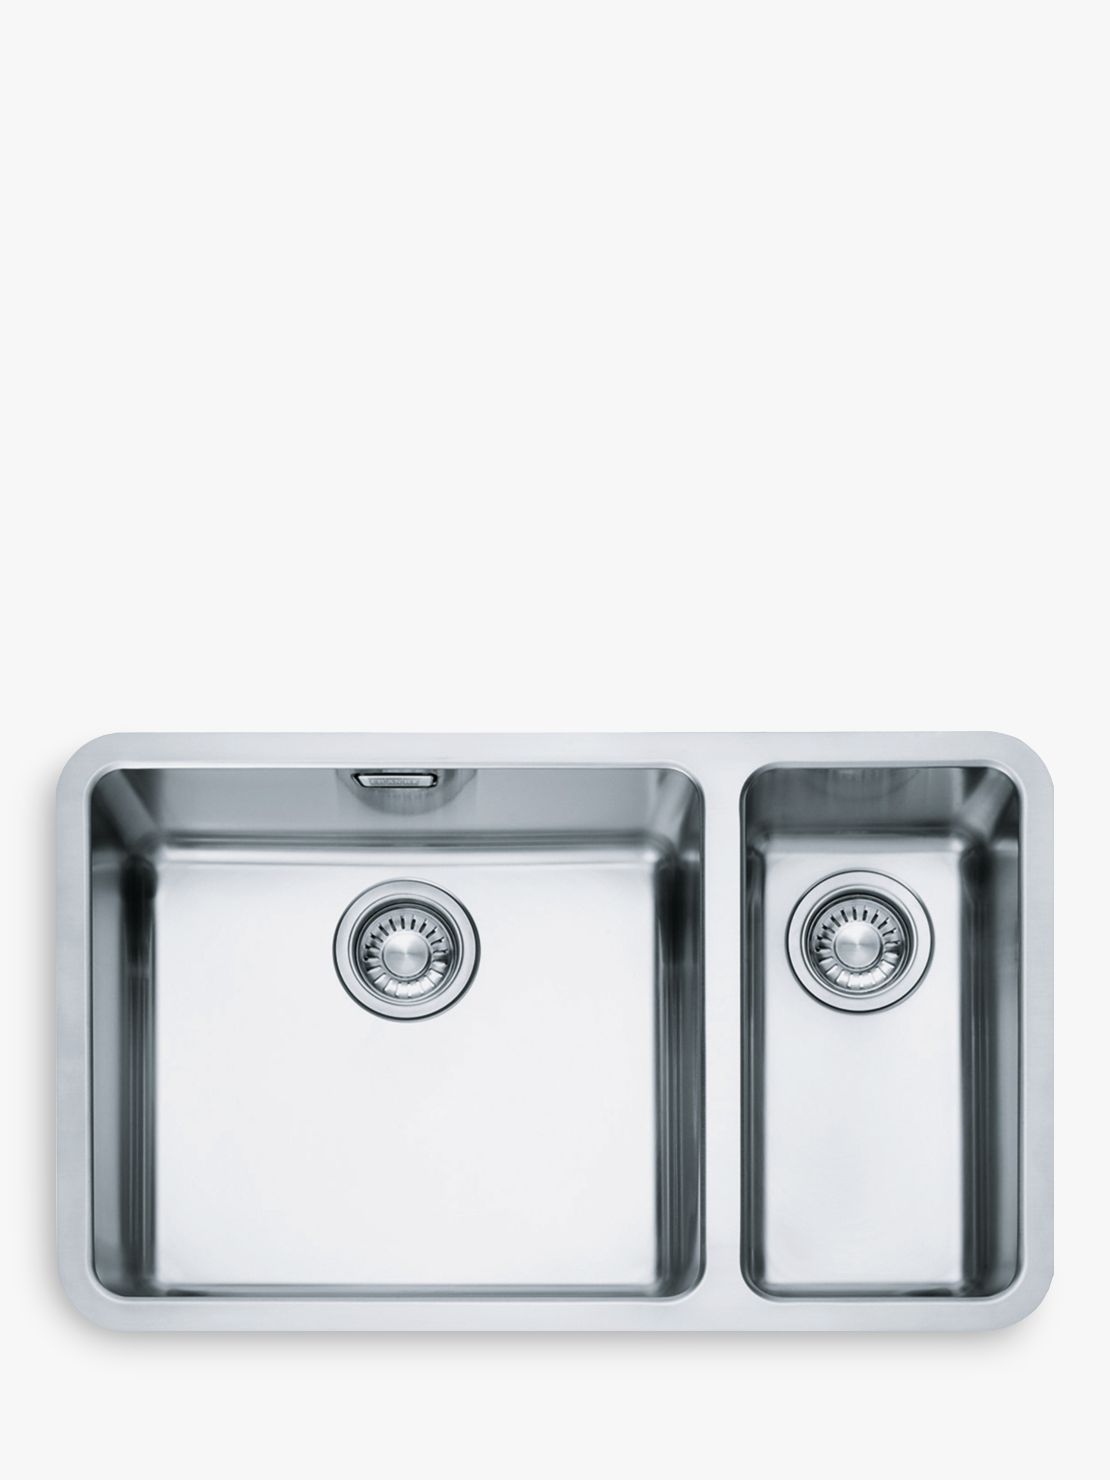 Franke Kubus KBX 160 45-20 Left Hand 1.5 Bowl Undermounted Kitchen Sink, Stainless Steel